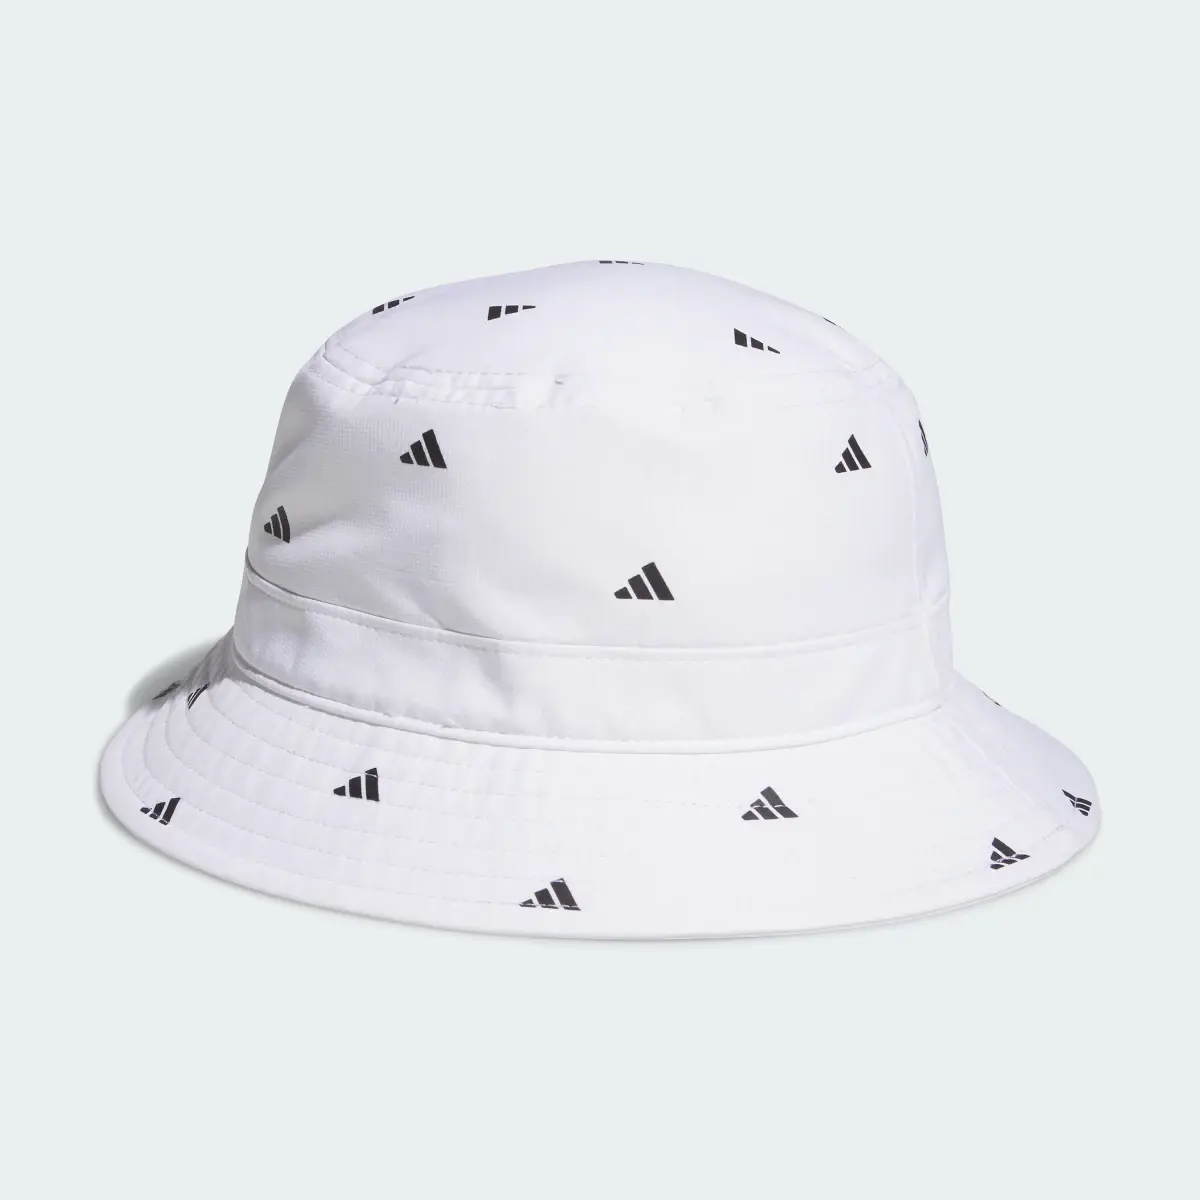 Adidas Women's Printed Bucket Hat. 3